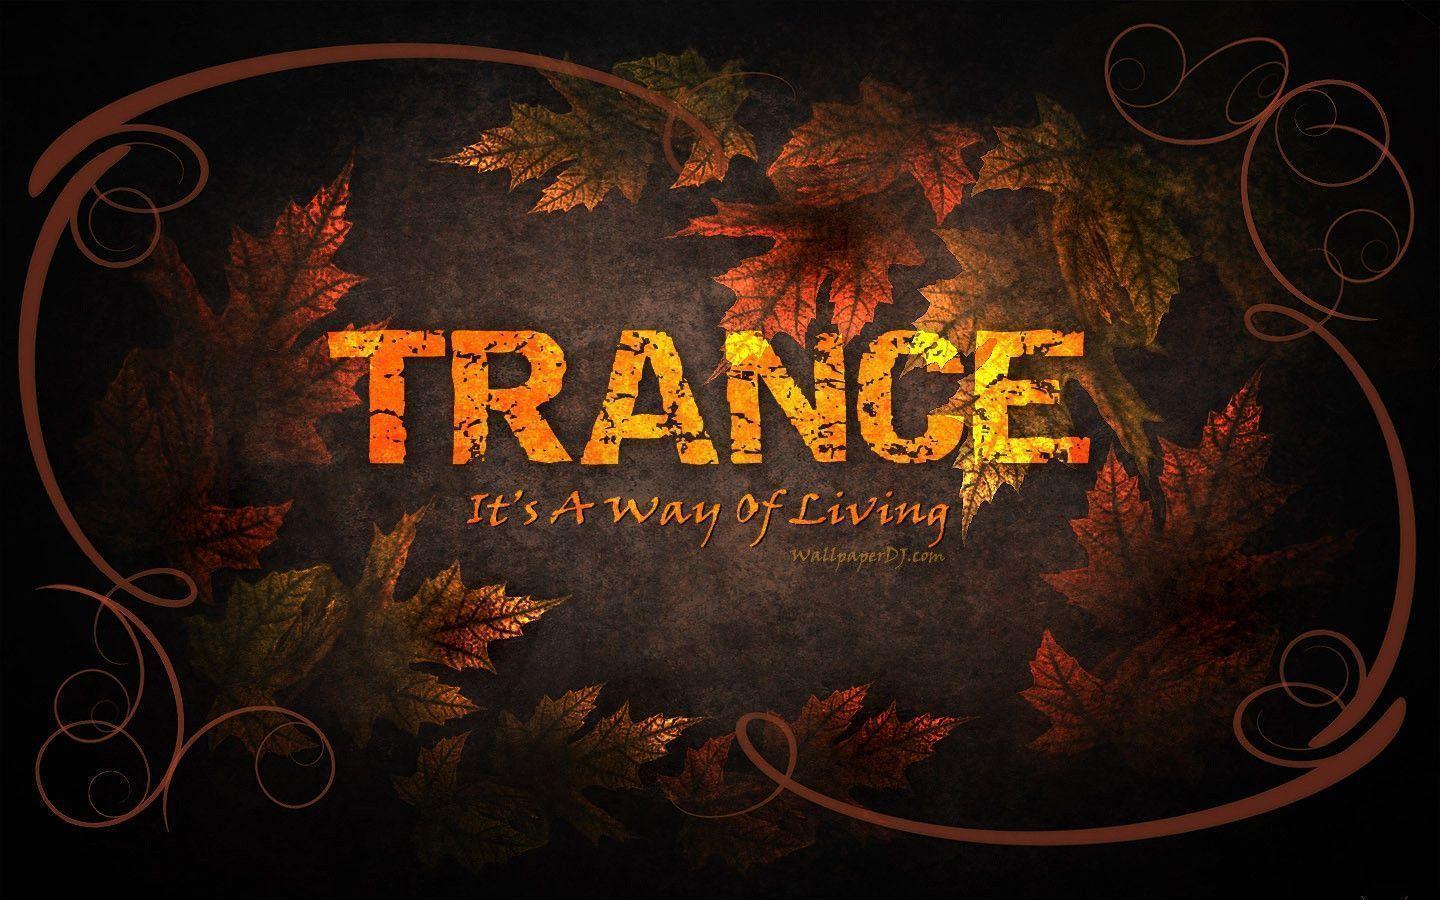 Trance Season wallpaper, music and dance wallpaper